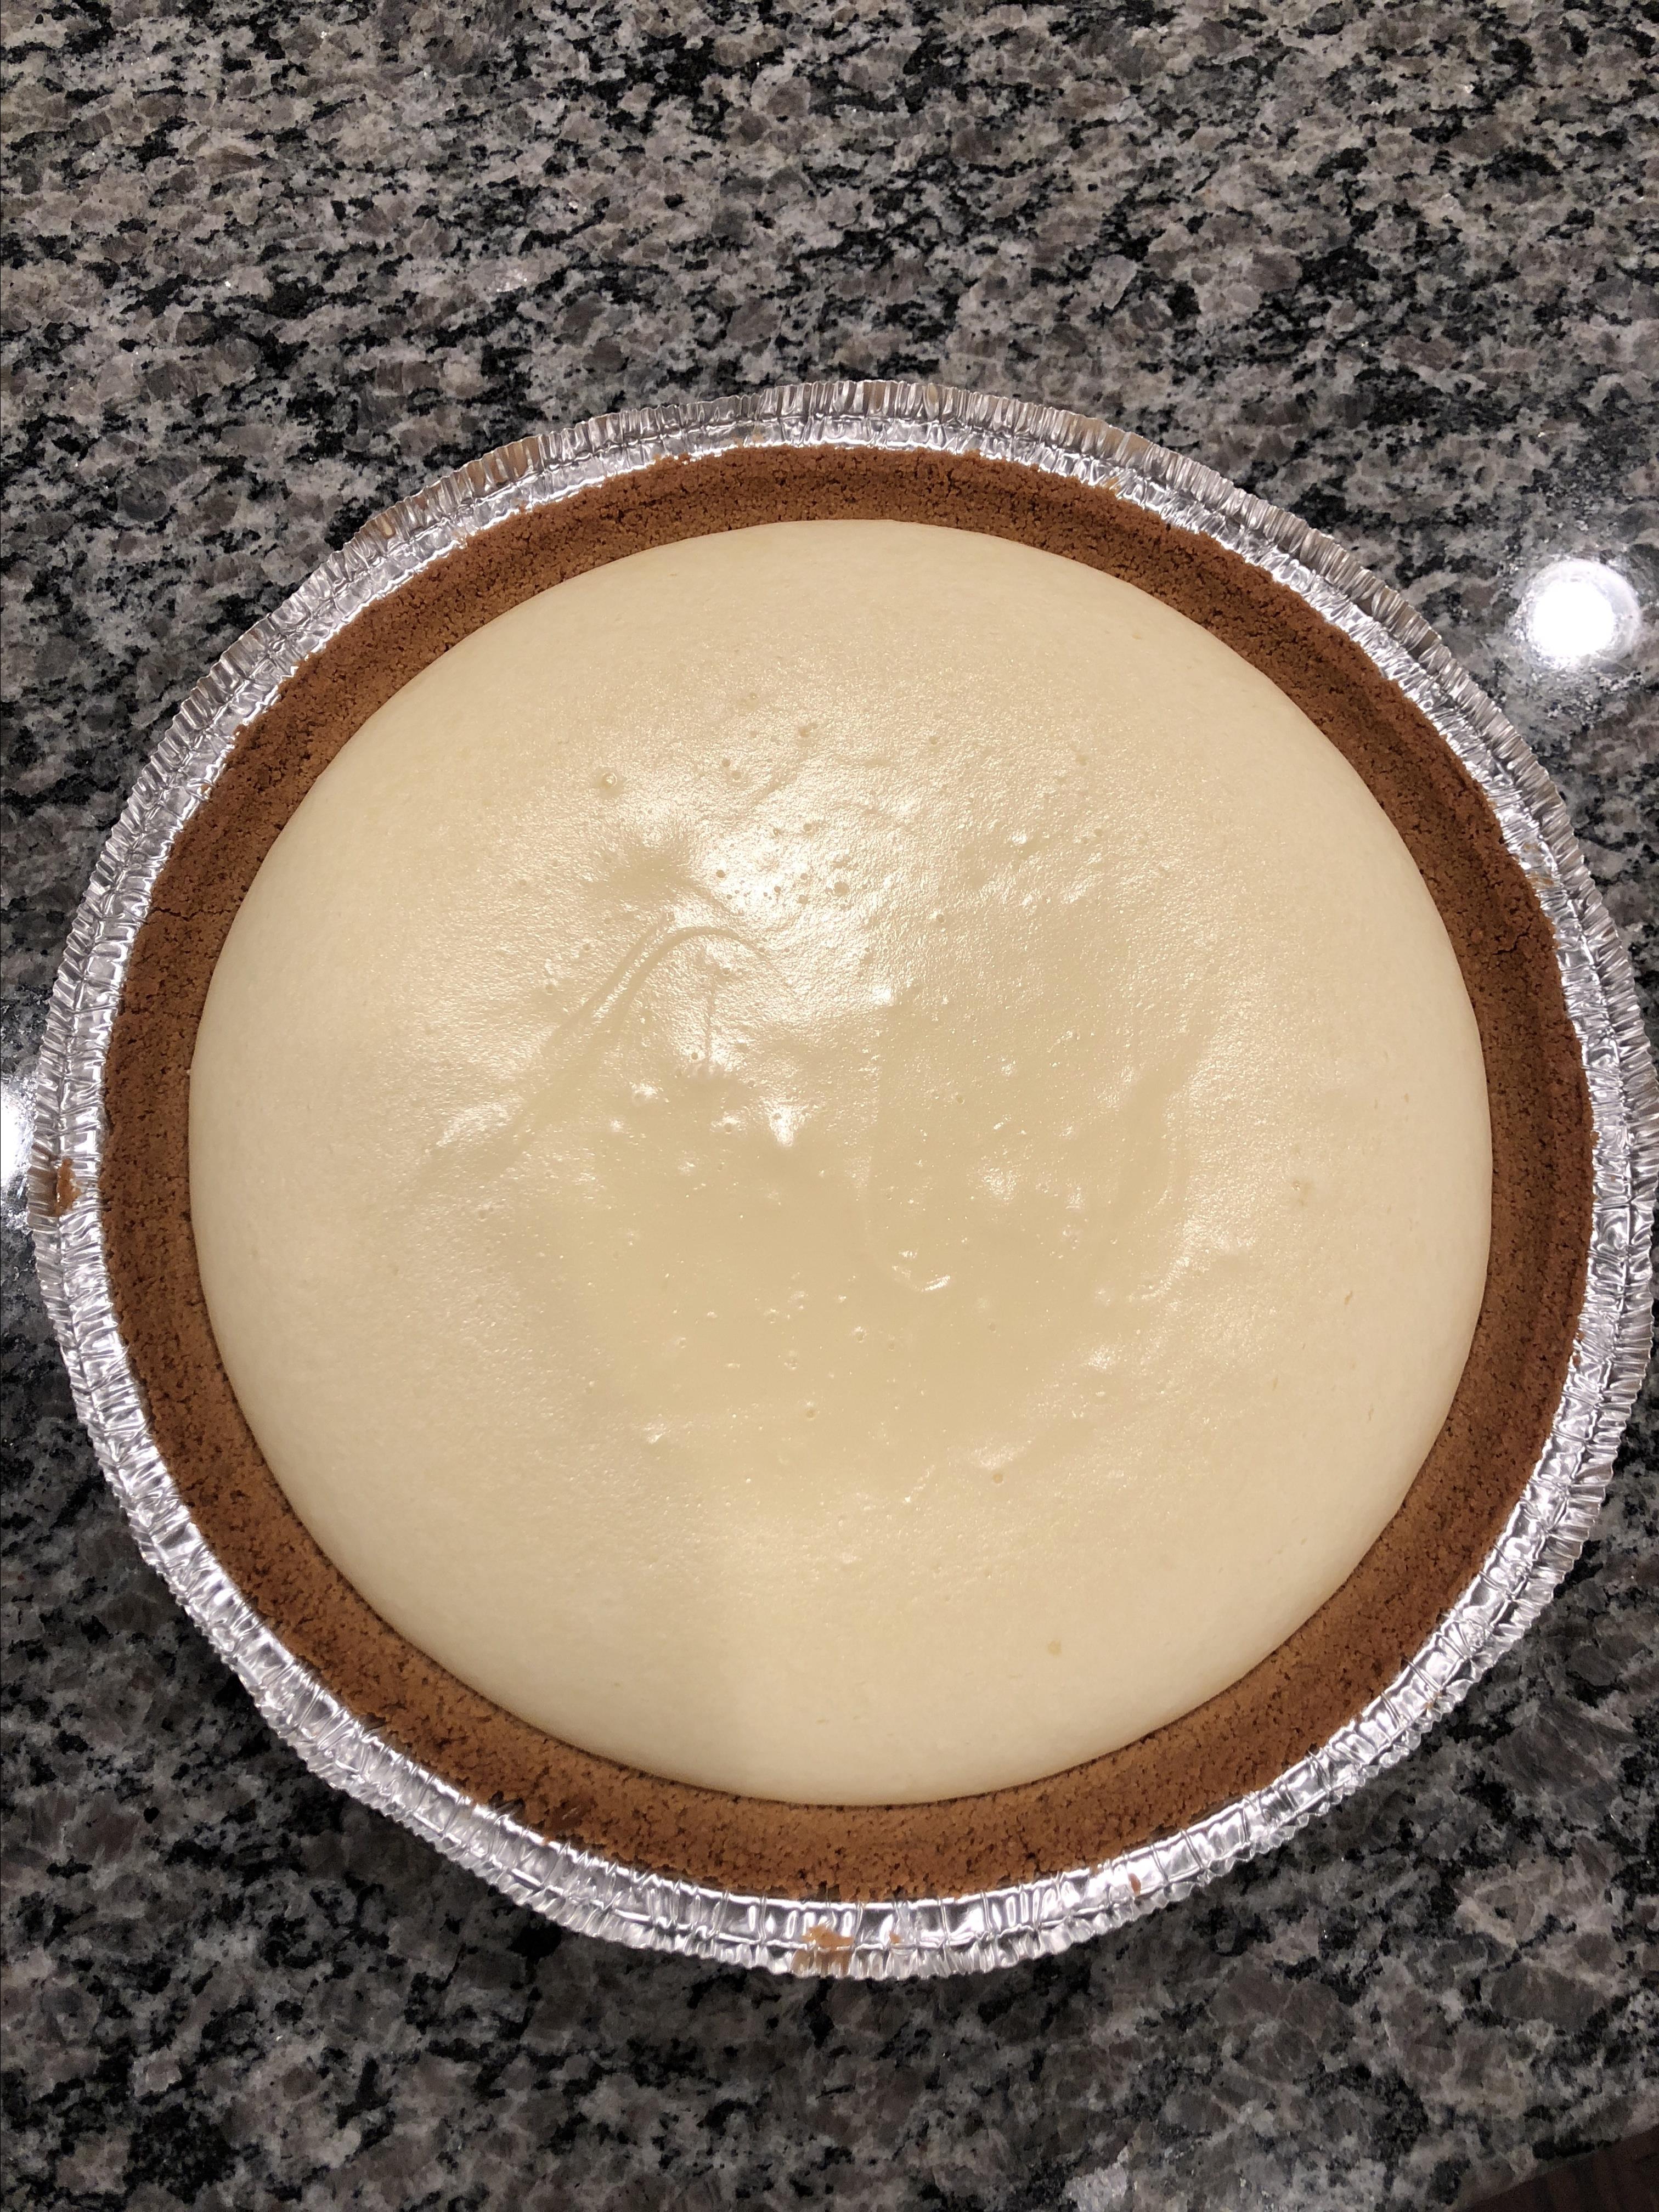 Cream Cheese Pie 